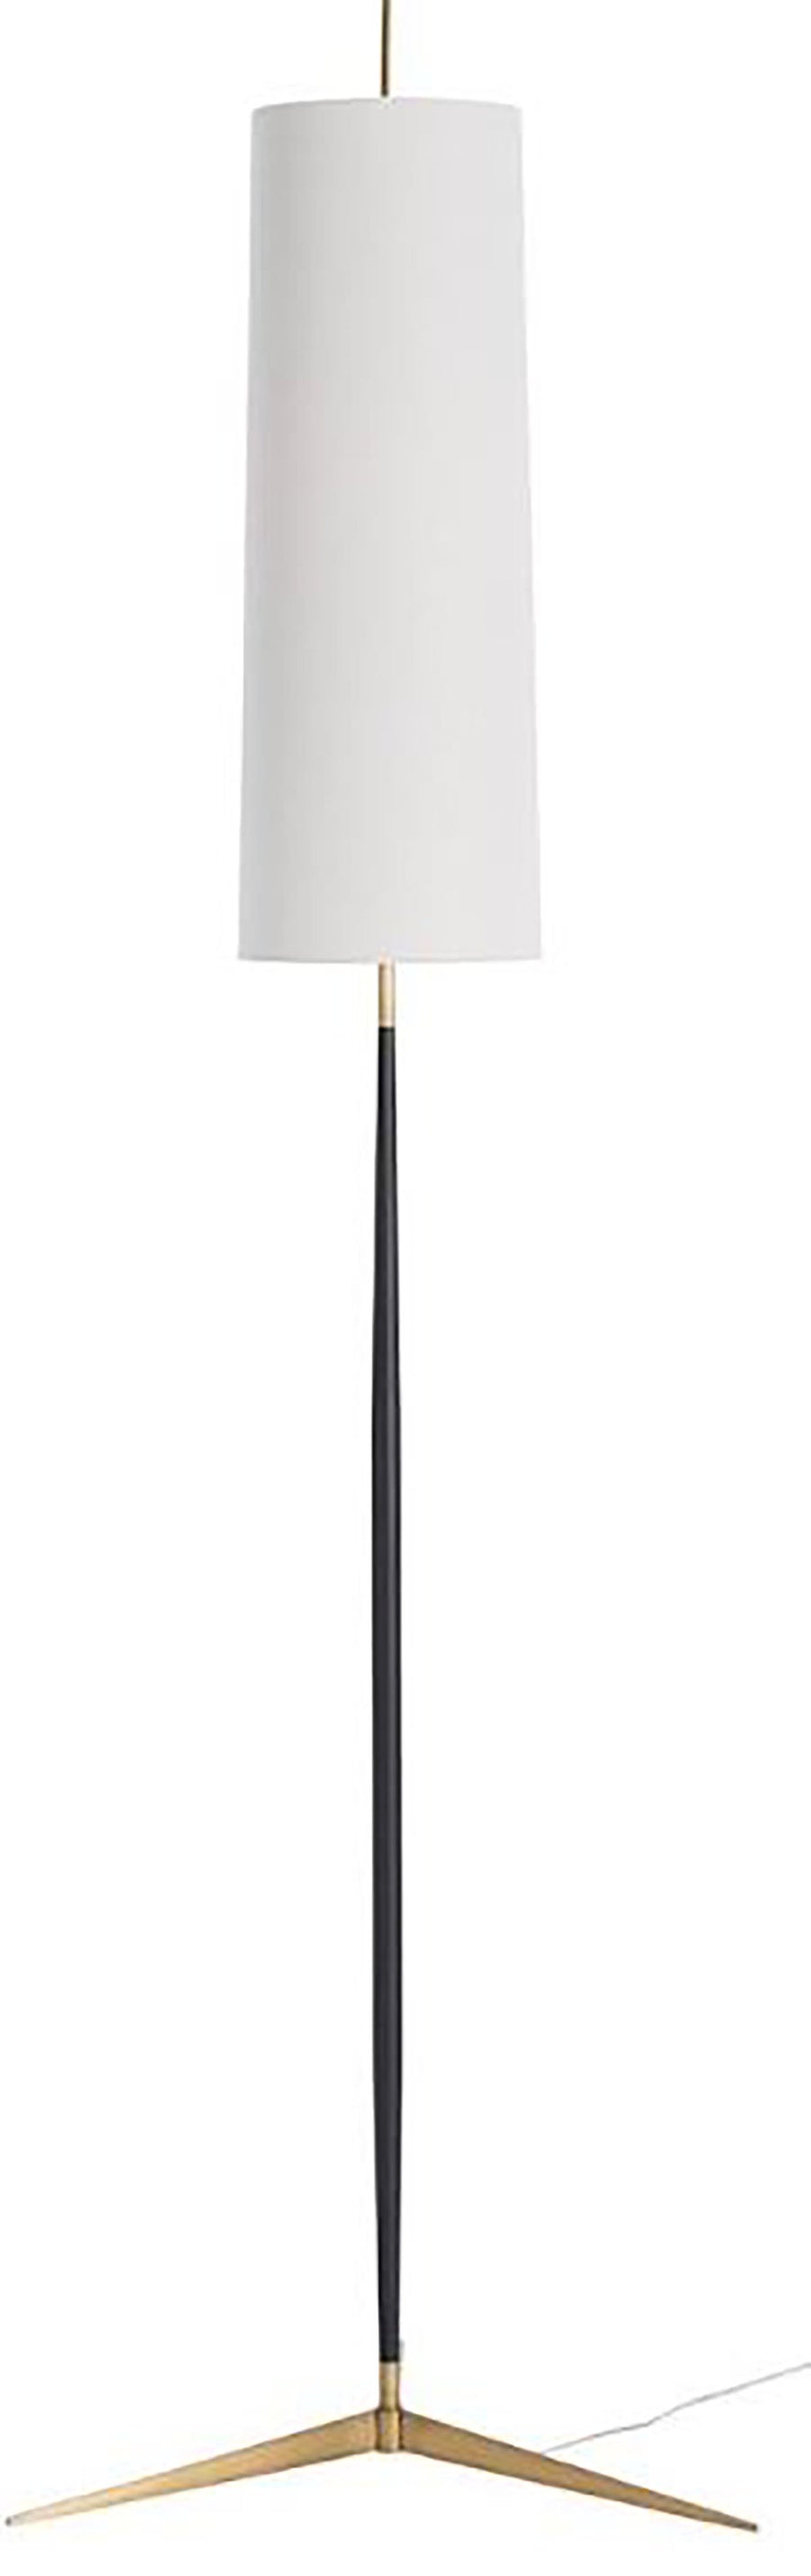 Dunn Floor Lamp with bronze, slender steel body and singular off-white shade.